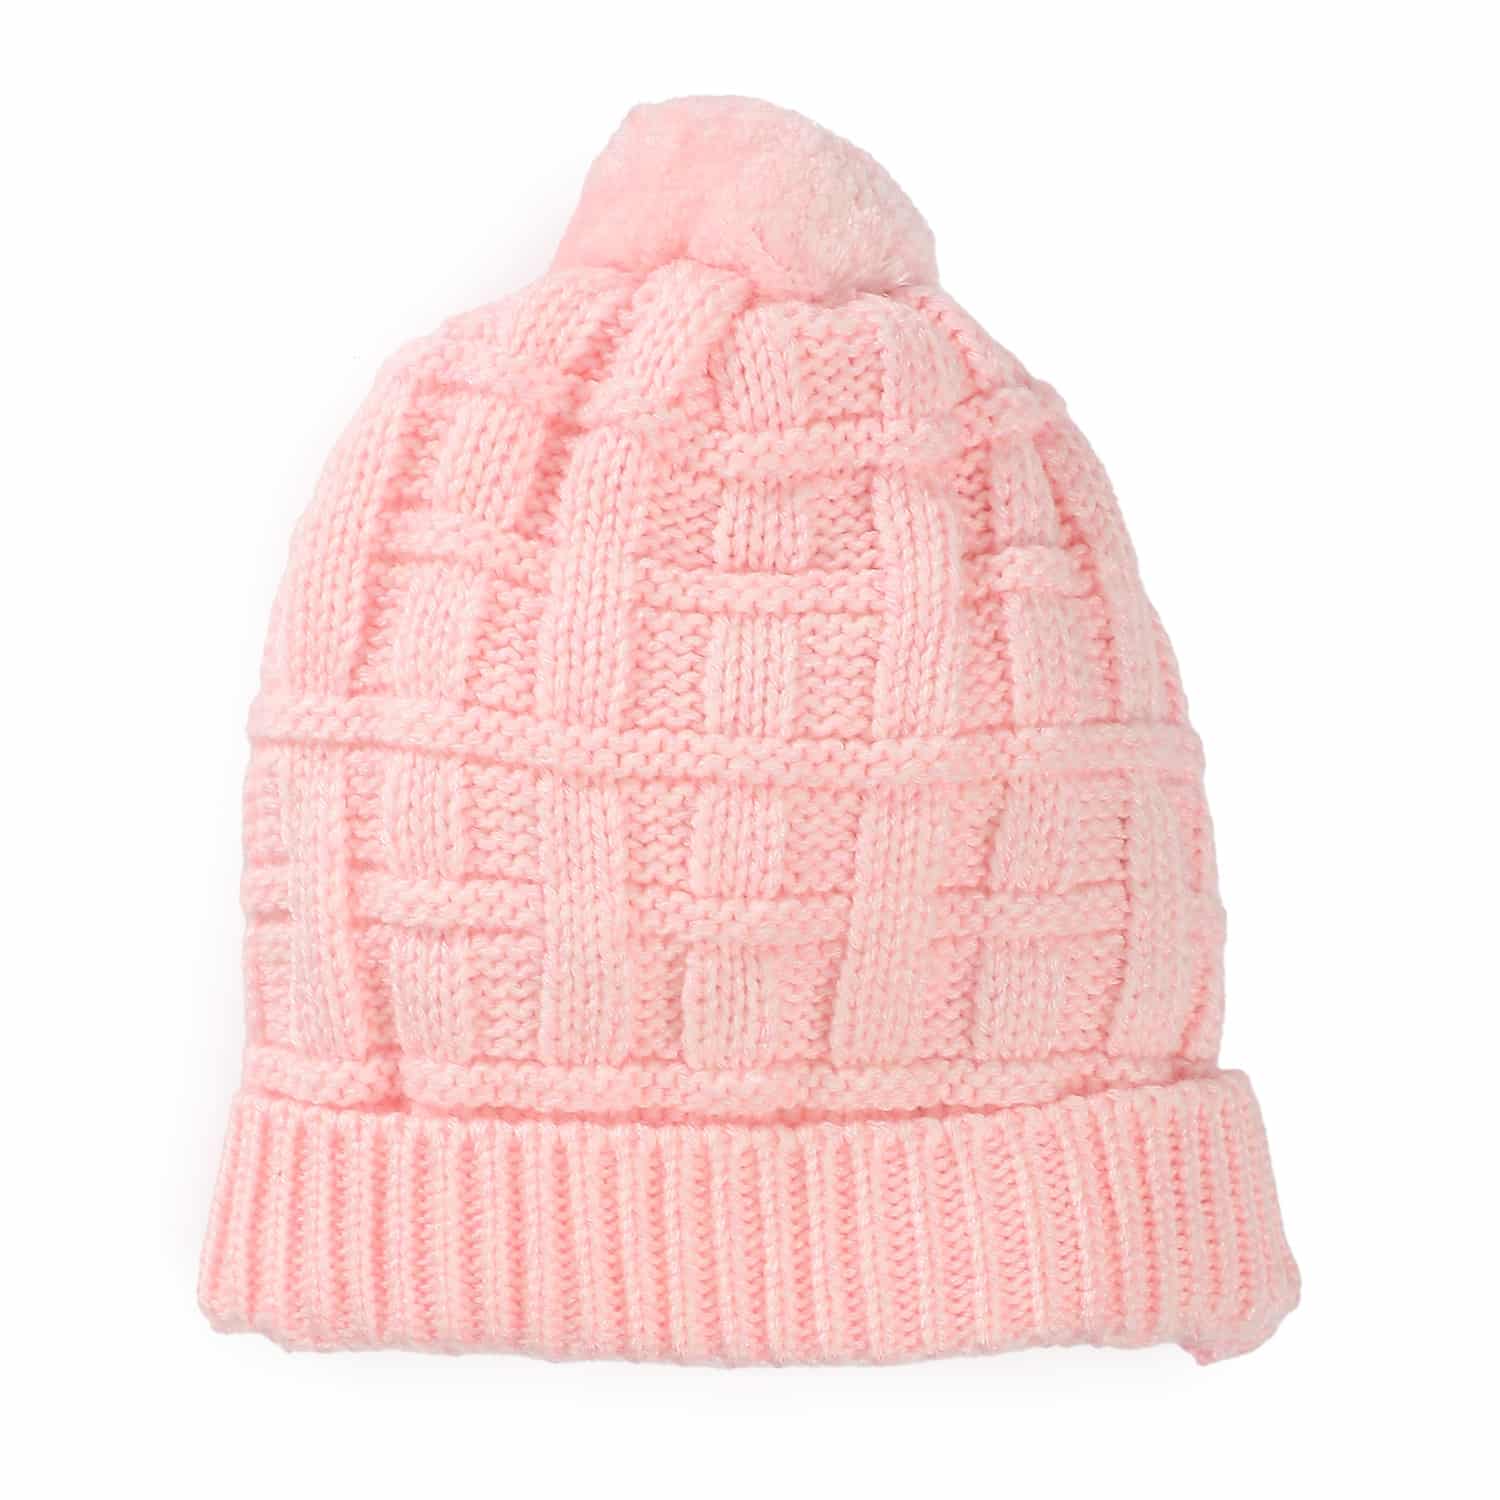 Kids Winter Warm knitted Hat - Pink